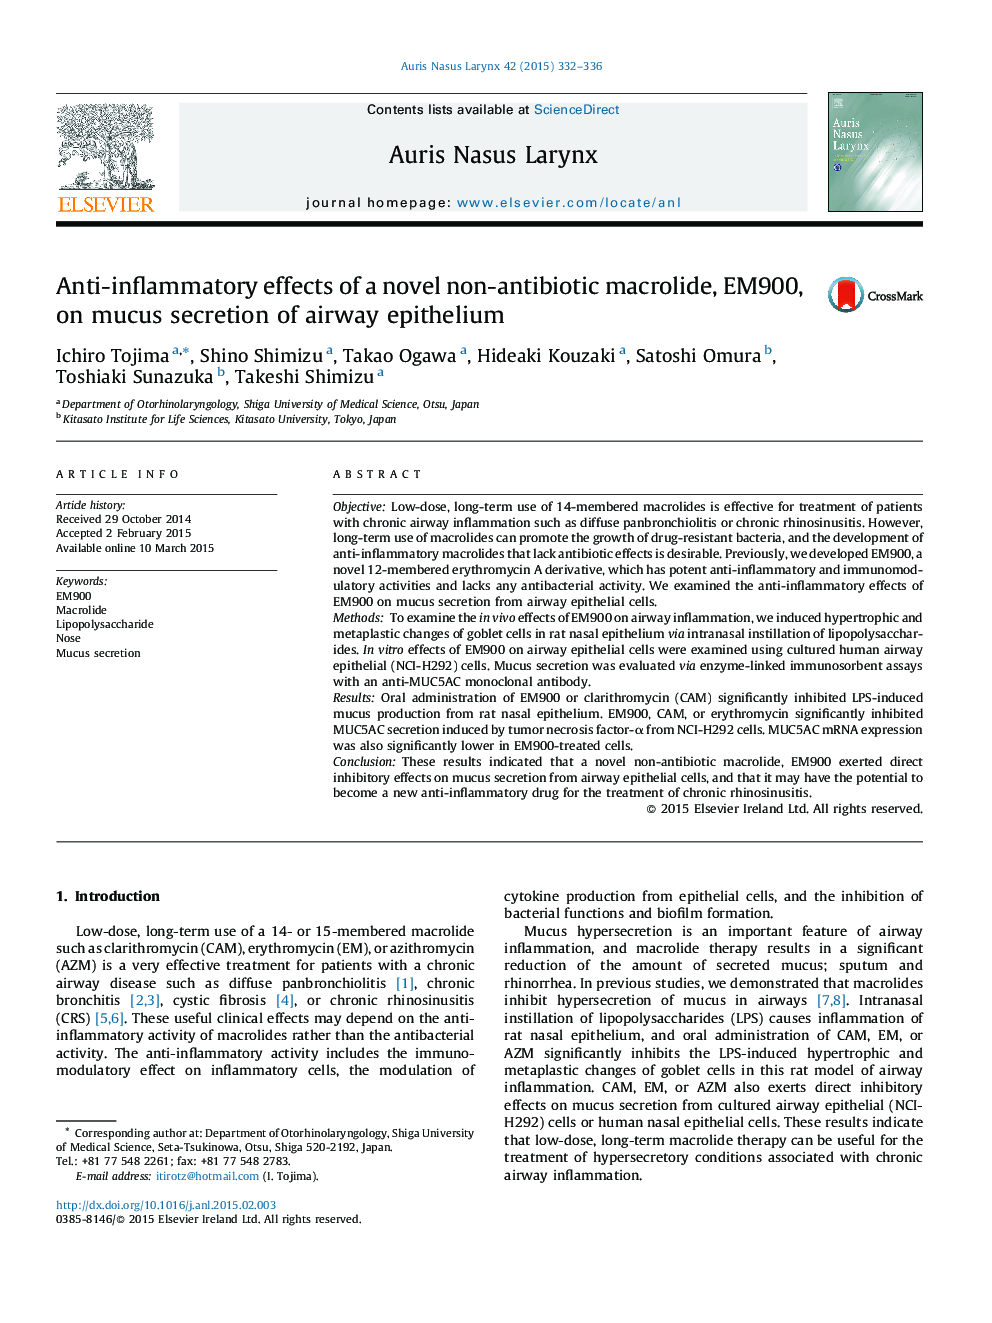 Anti-inflammatory effects of a novel non-antibiotic macrolide, EM900, on mucus secretion of airway epithelium